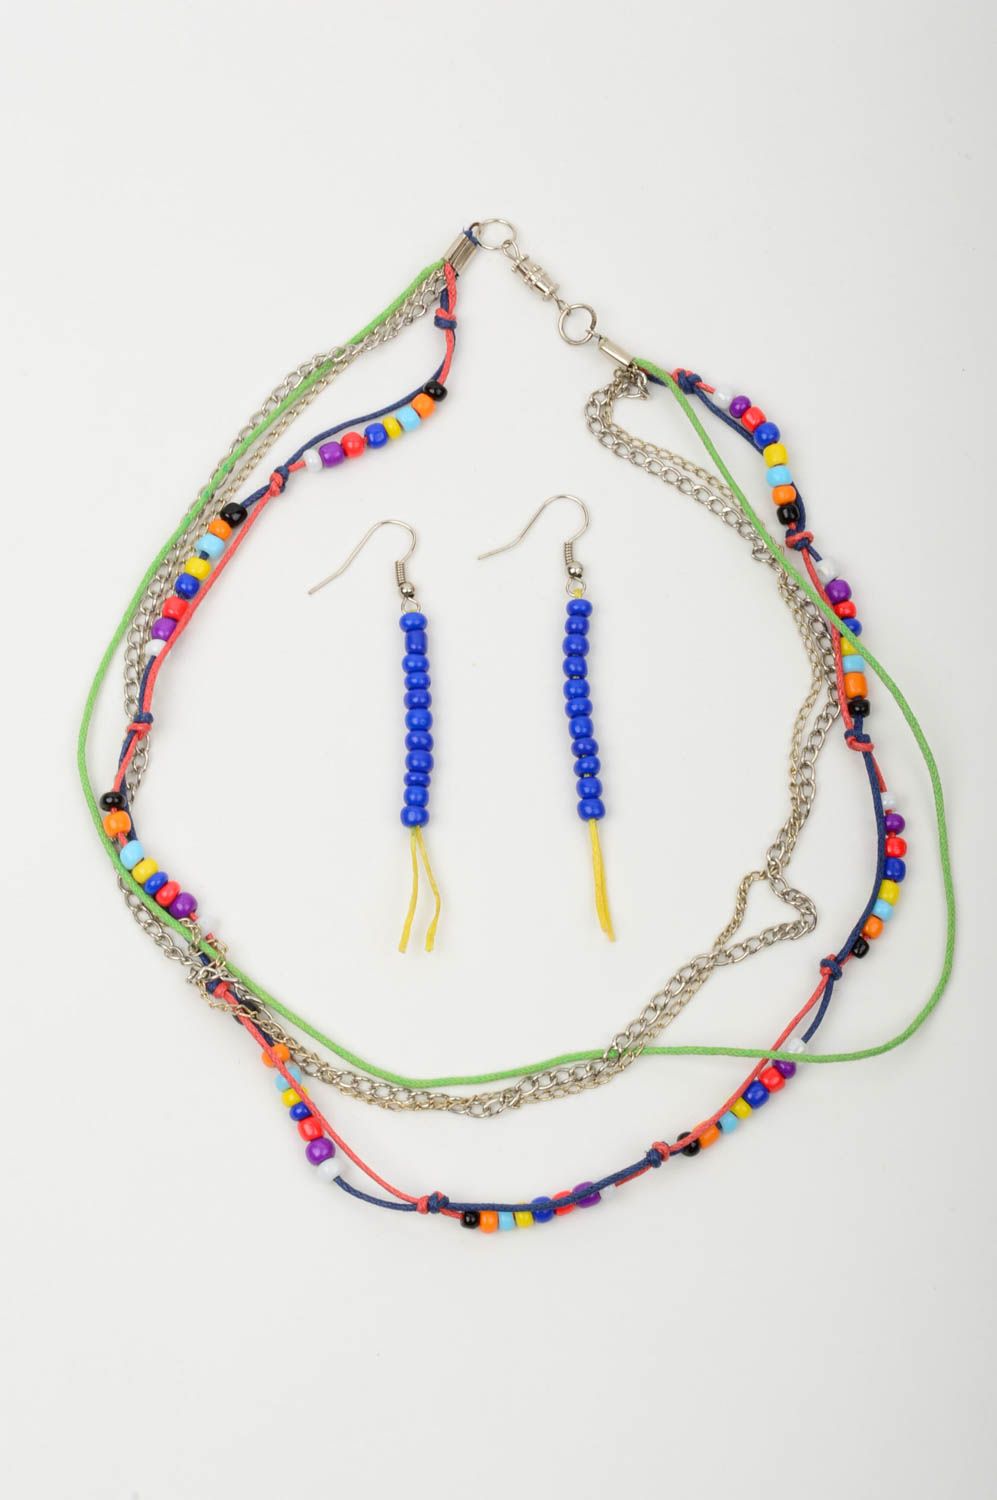 Handmade earrings designer necklace jewelry set unusual gift for women photo 3